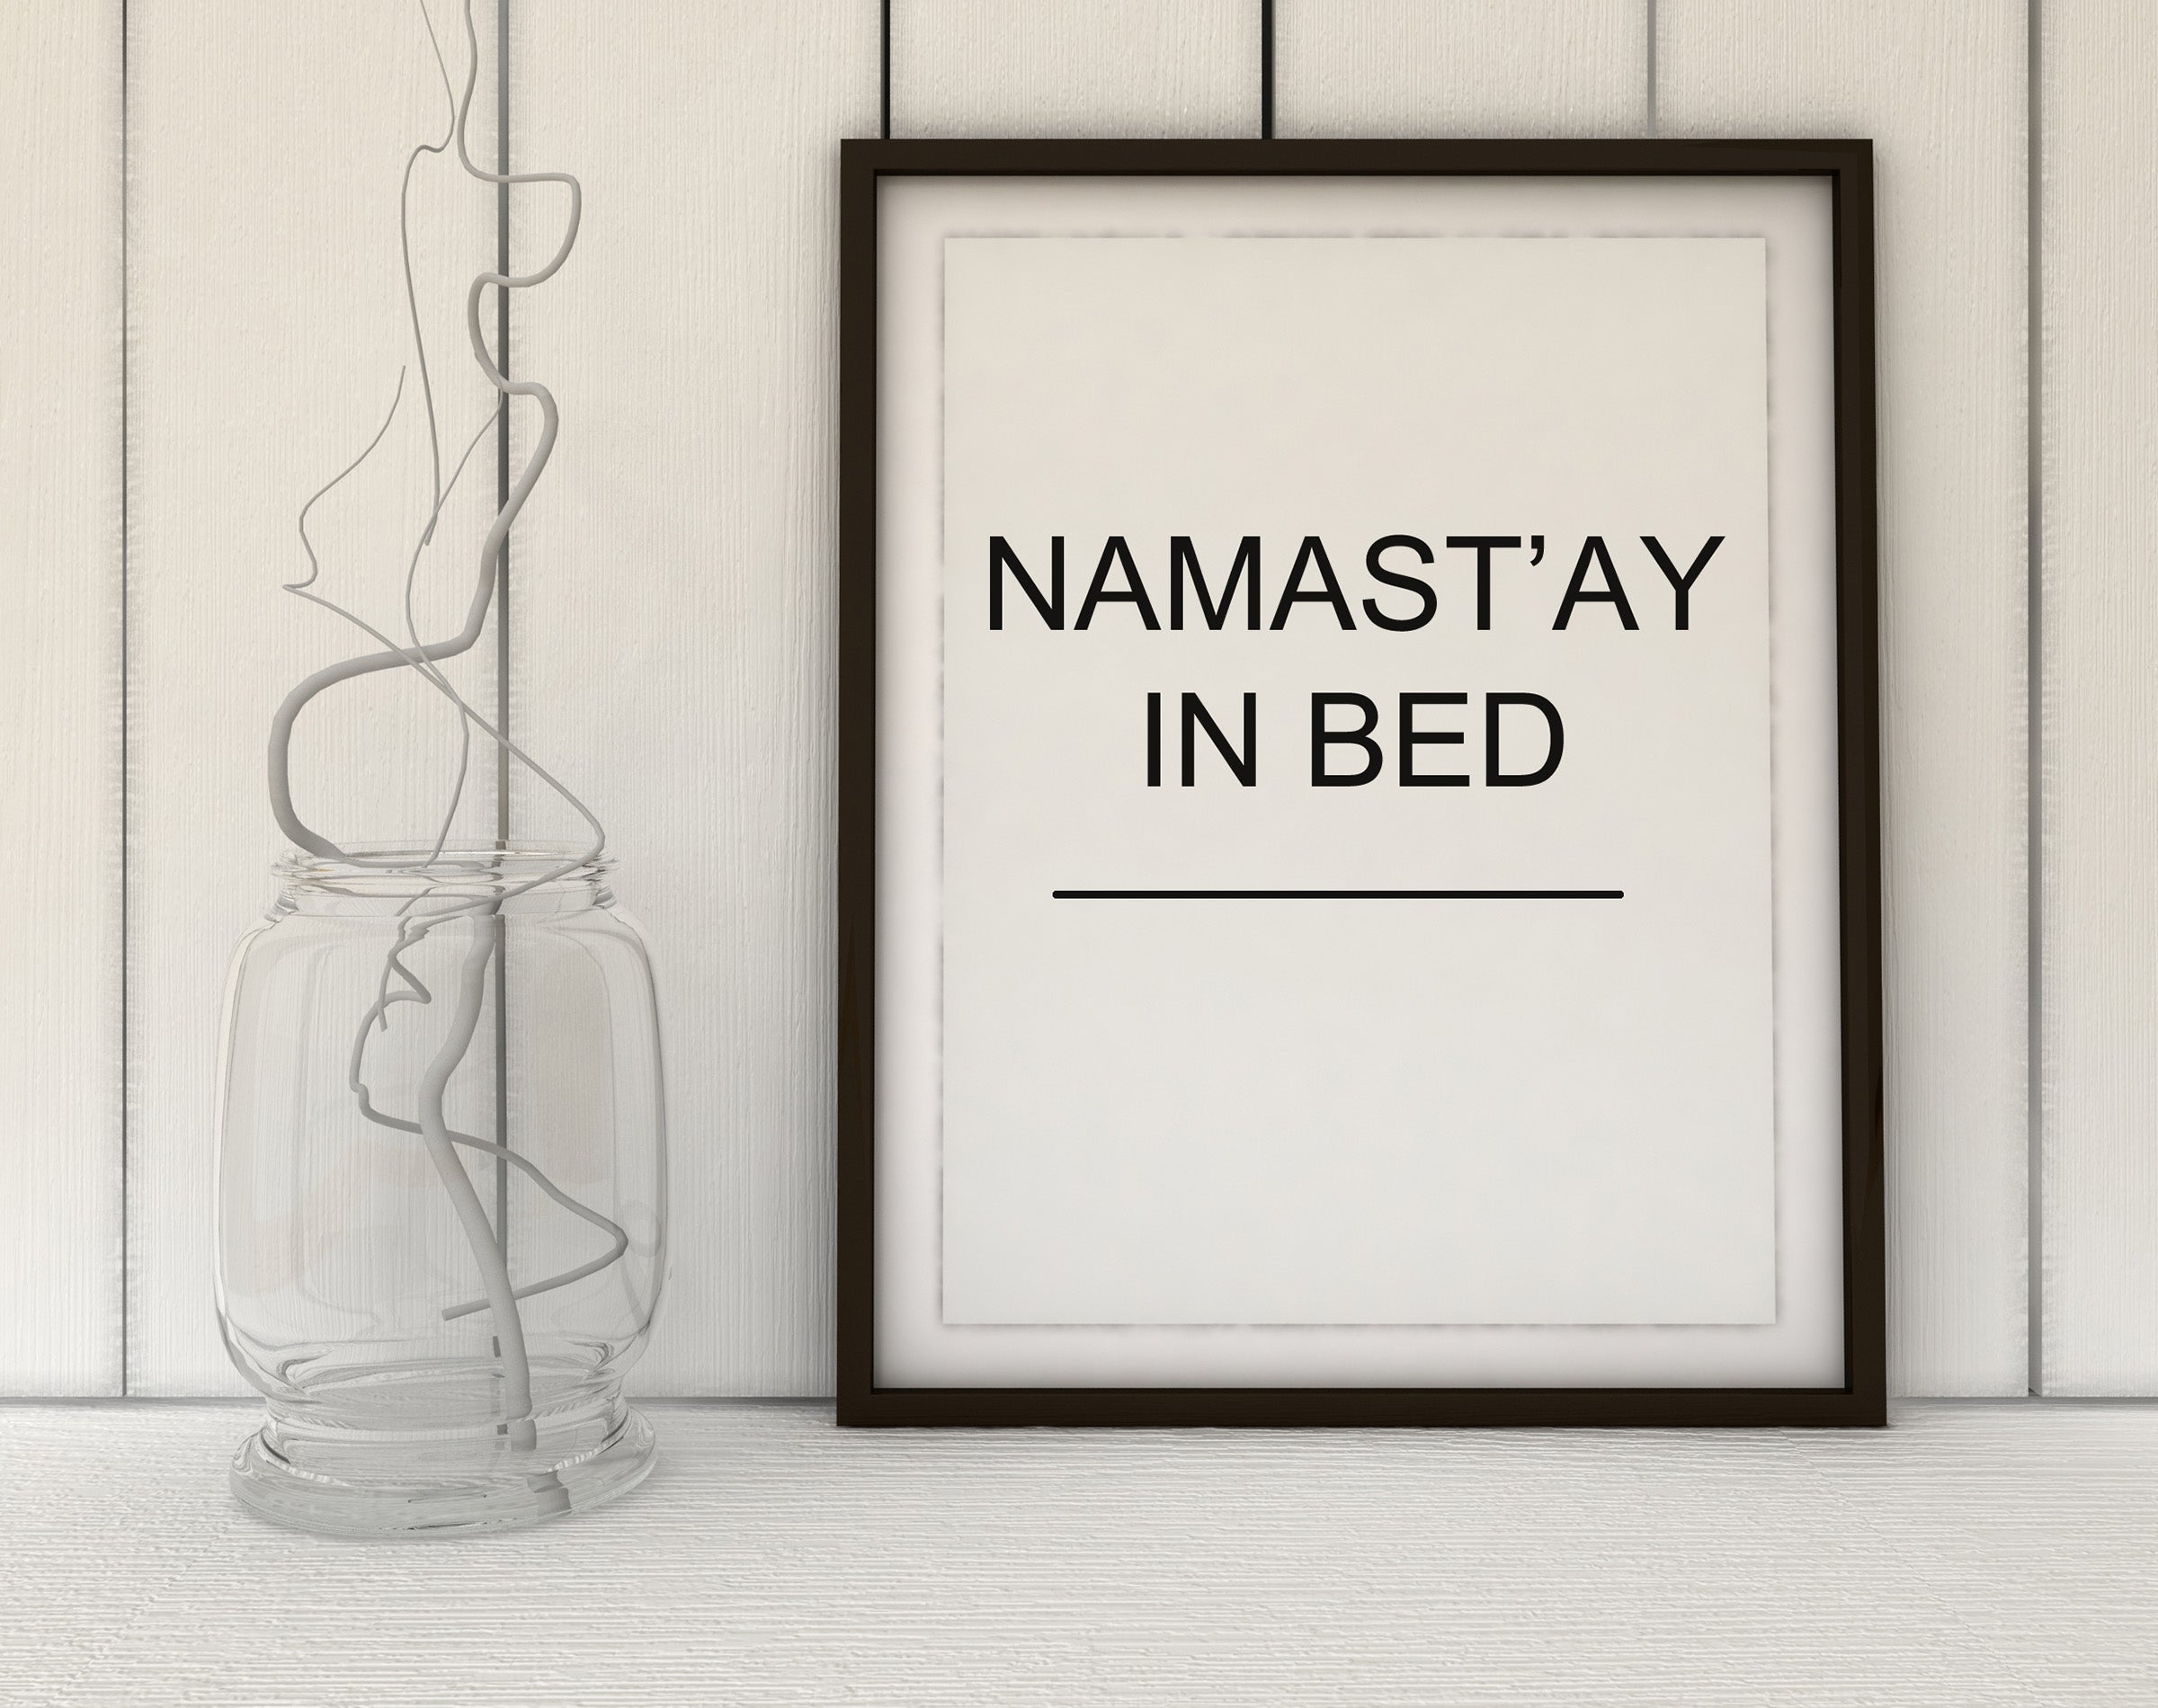 Namasay in bed